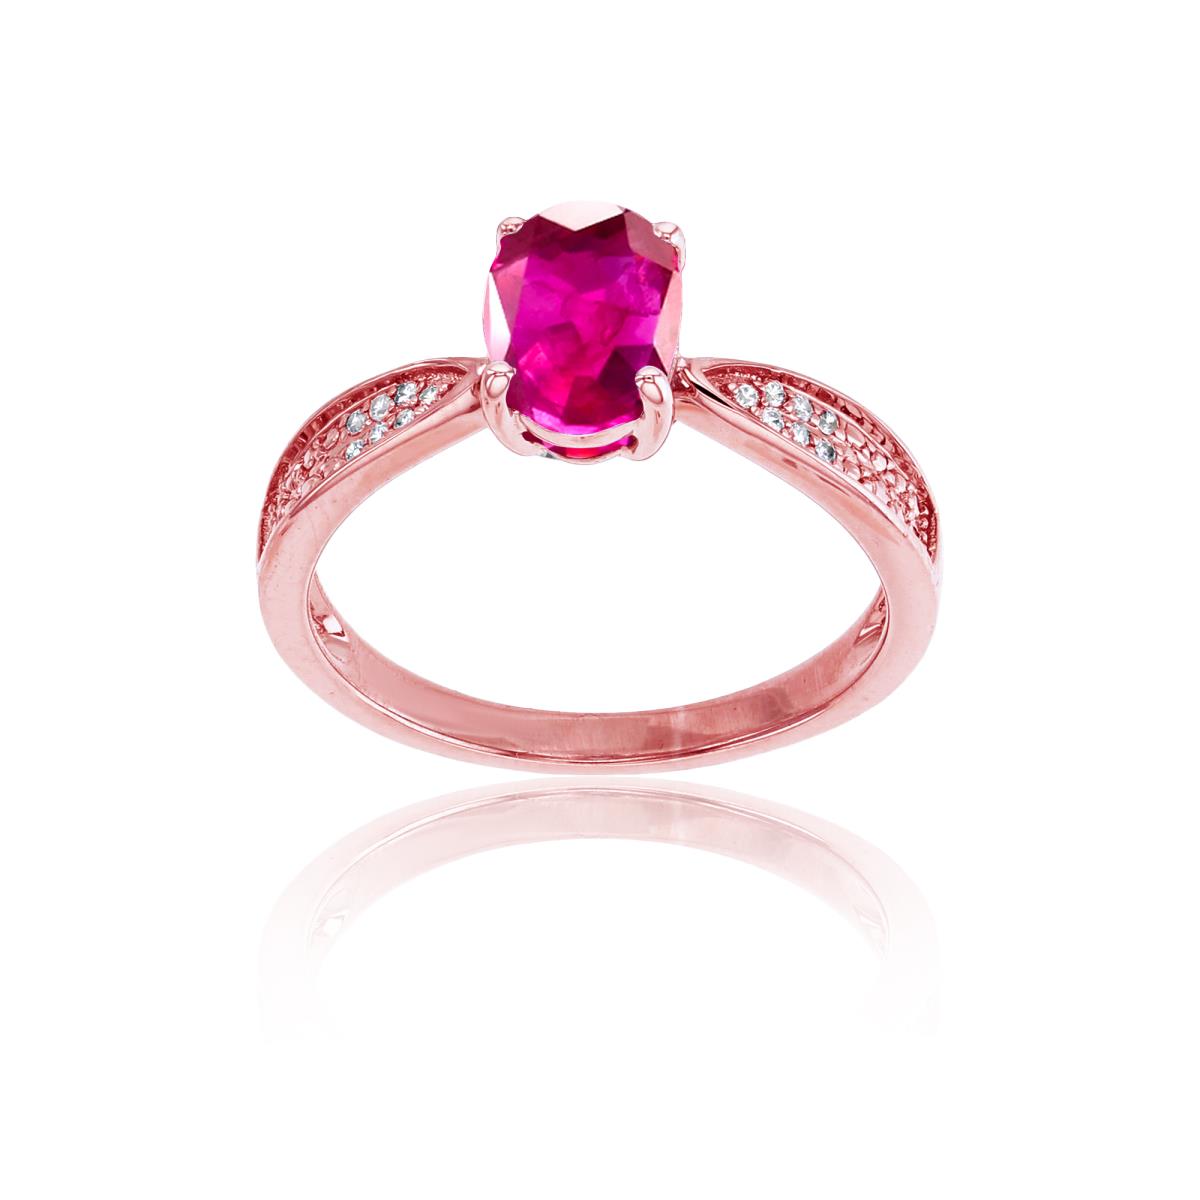 10K Rose Gold 0.05 CTTW Rnd Diamond & 8x6mm Oval Glass Filled Ruby Center Ring